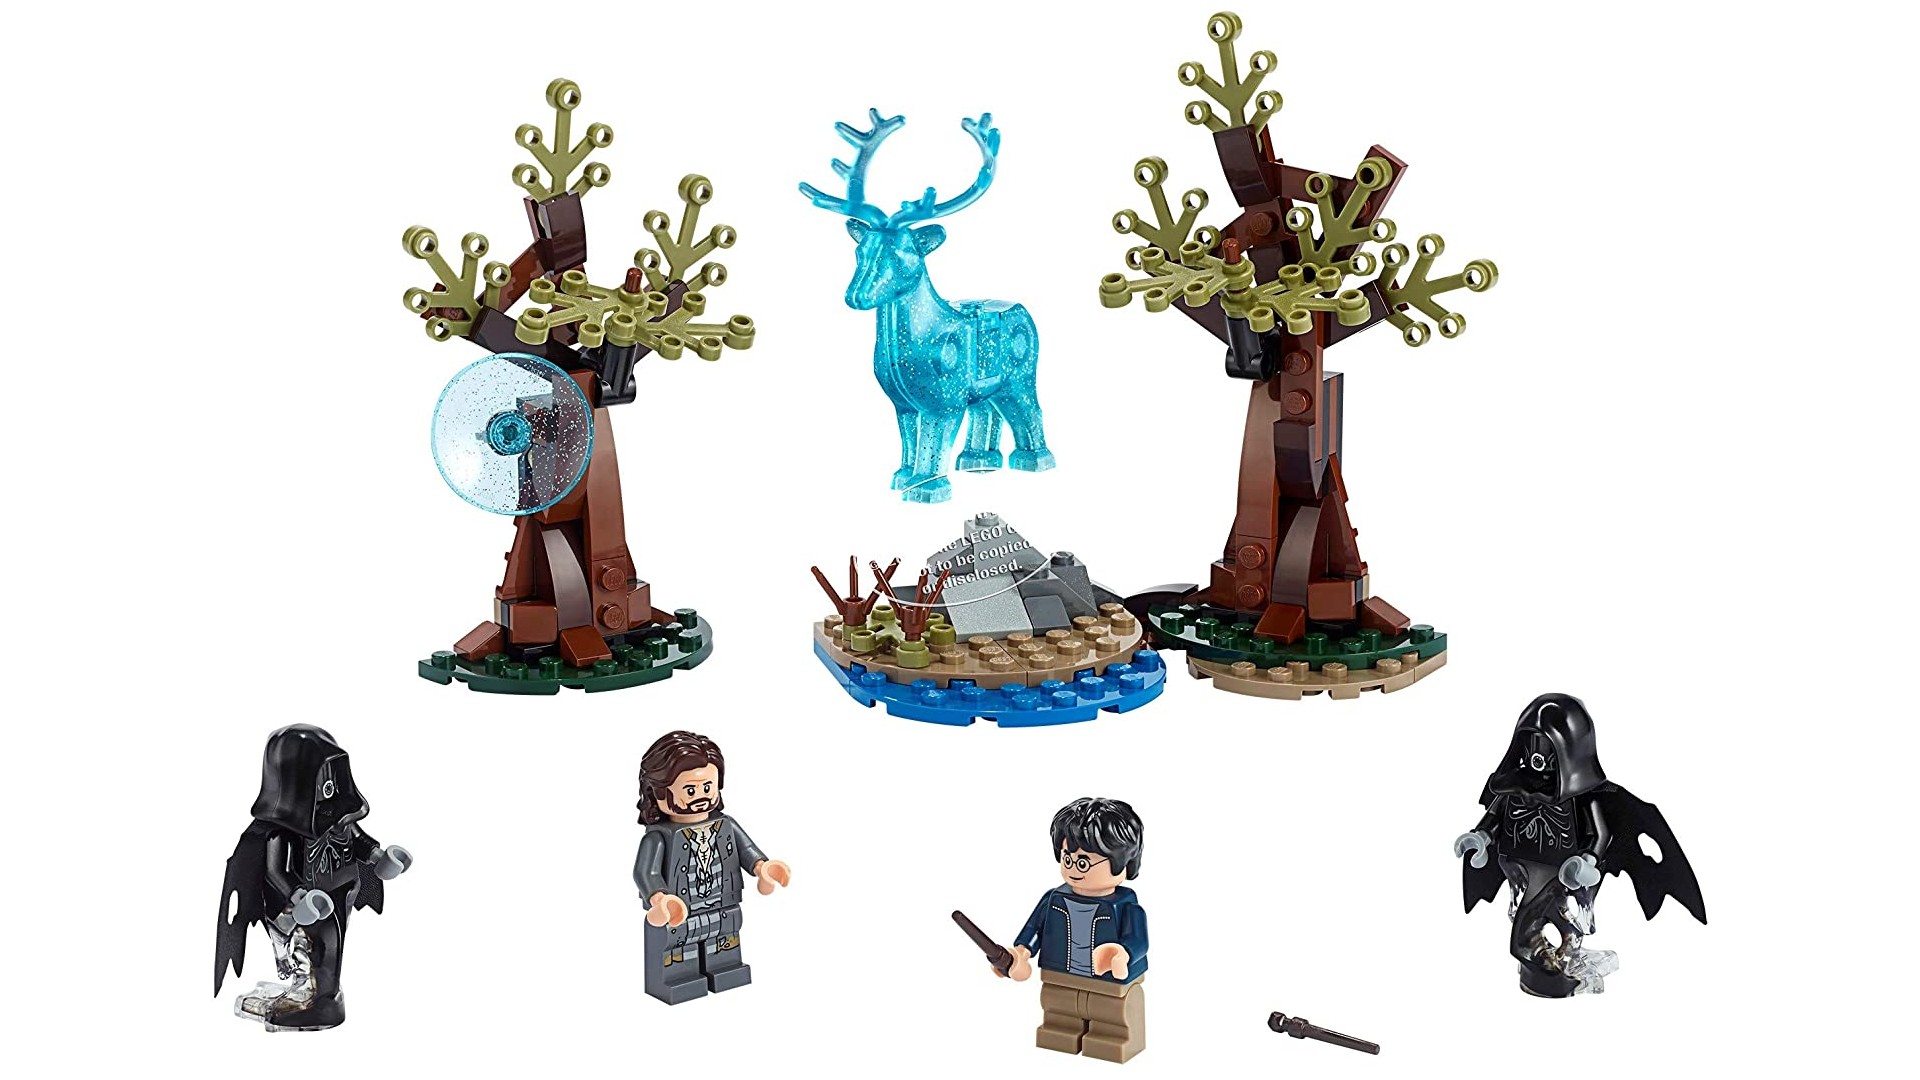 Lego Harry Potter: Trees, Patronus and minifigures